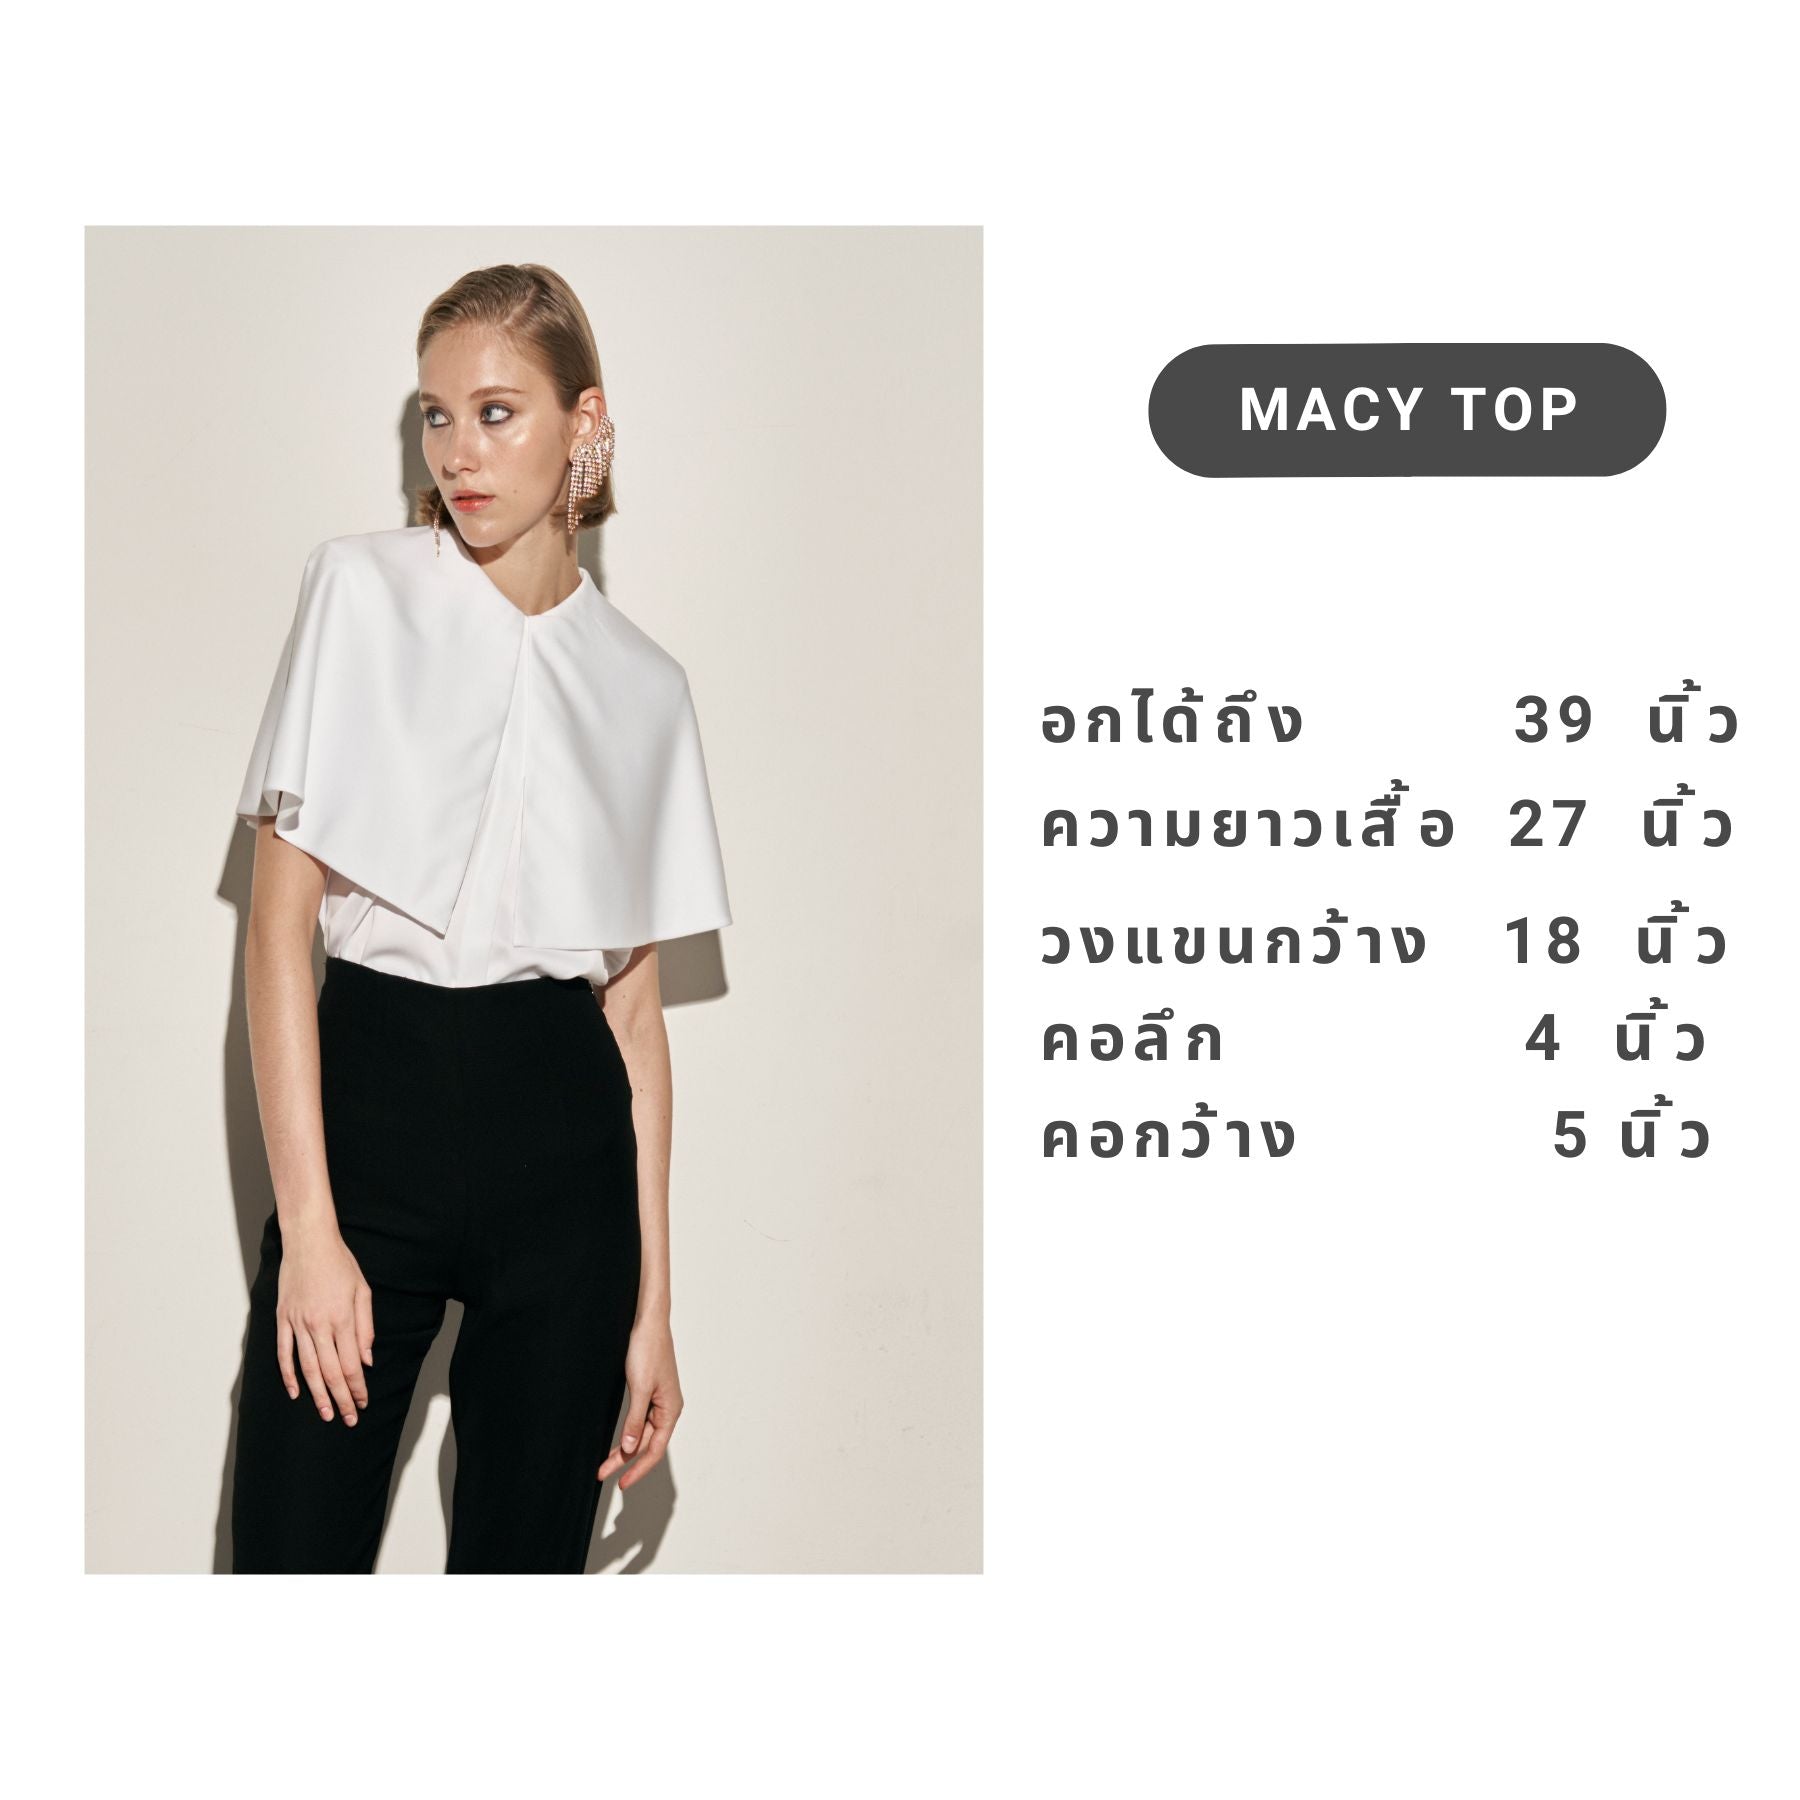 NICHp : Macy top